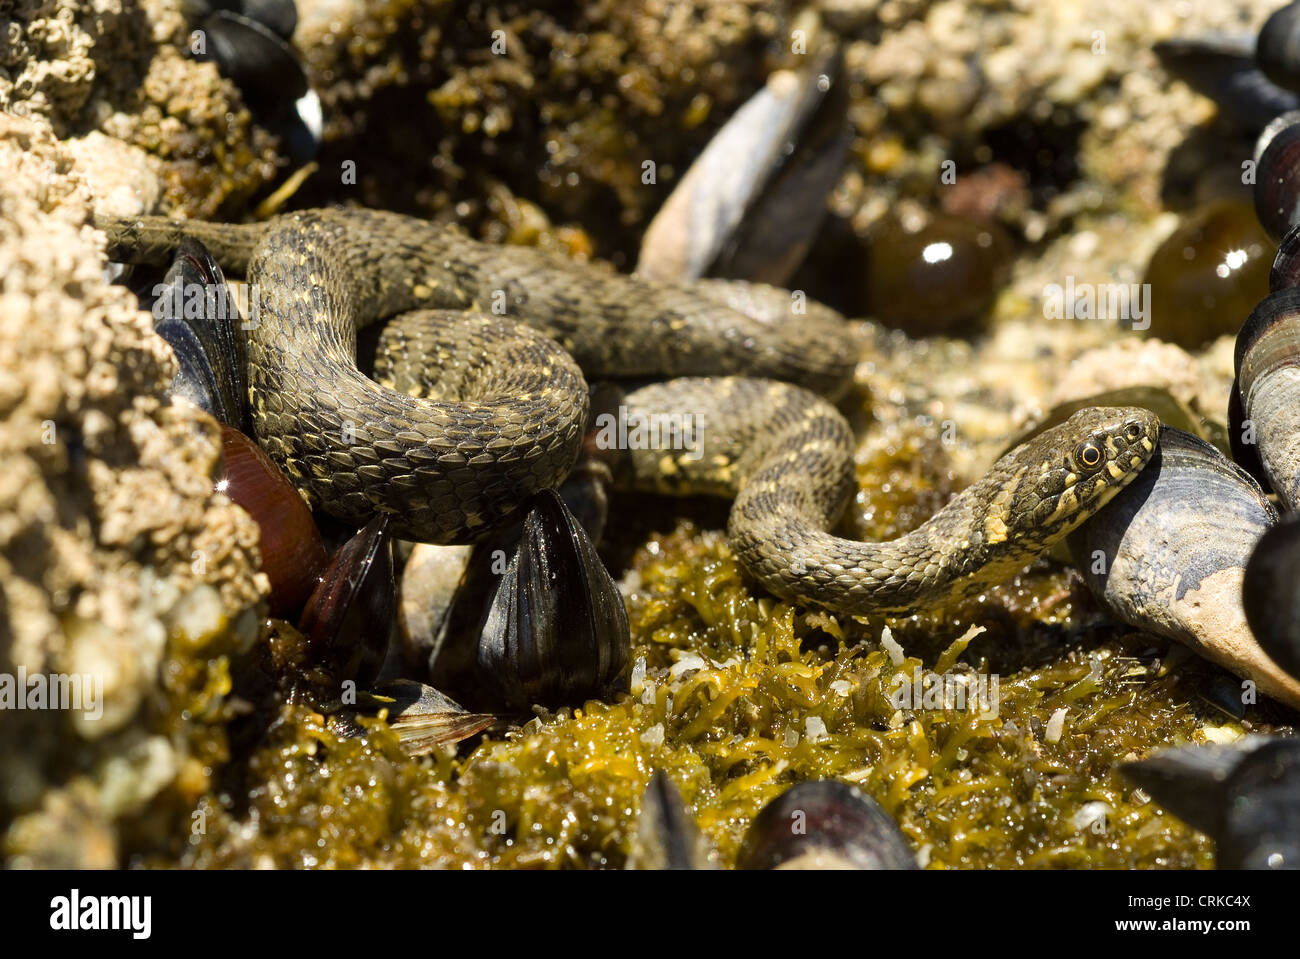 Viperine Natrix maura (serpent d'eau) en zone intertidale étangs marins. Banque D'Images